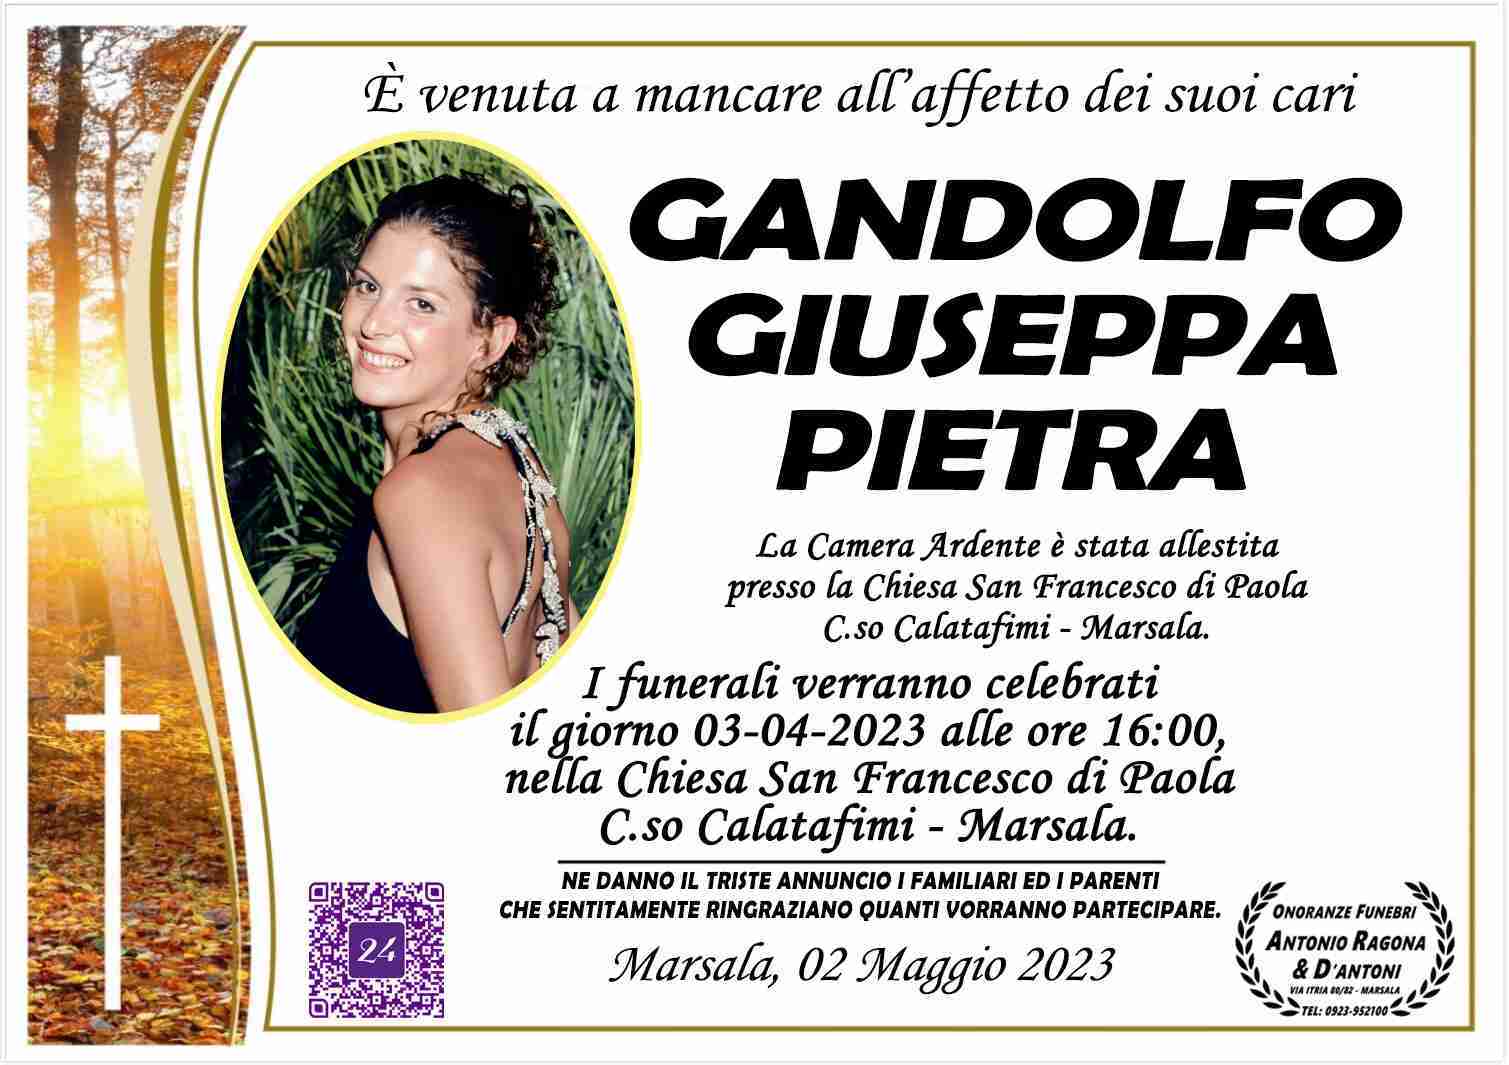 Giuseppa Pietra Gandolfo